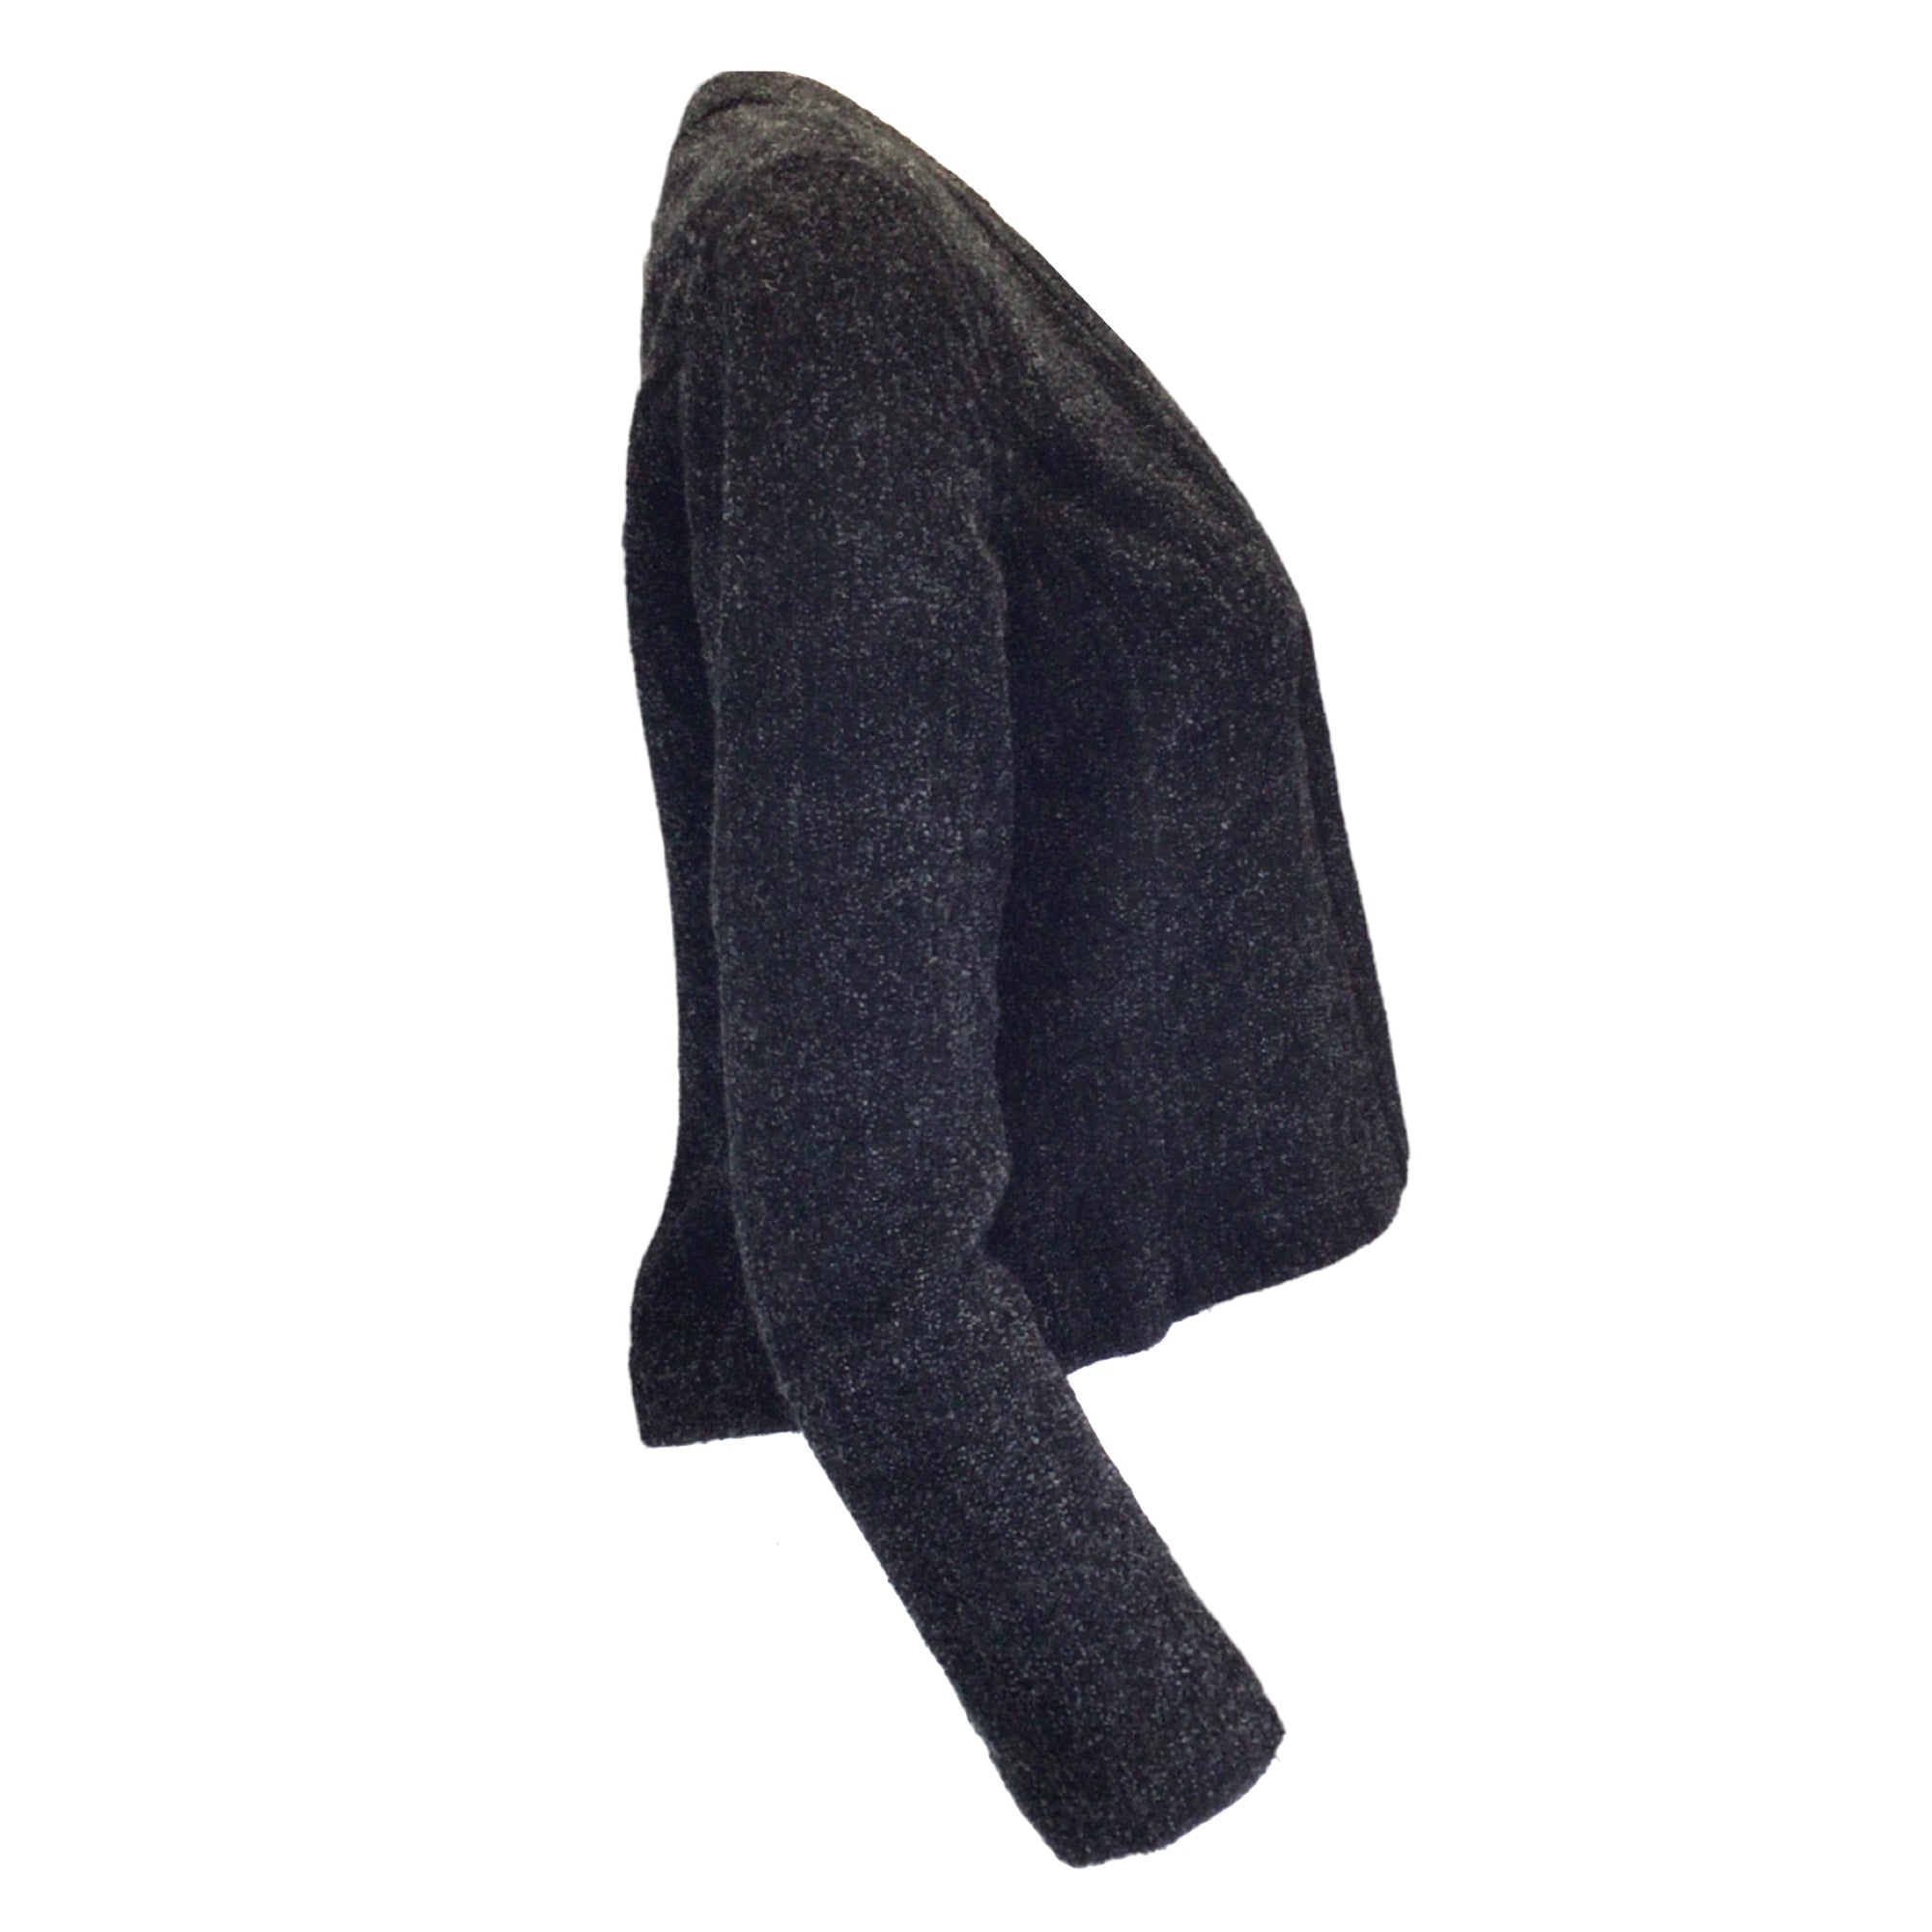 Akris Charcoal Grey Boucle Knit Wool and Alpaca Knit Jacket